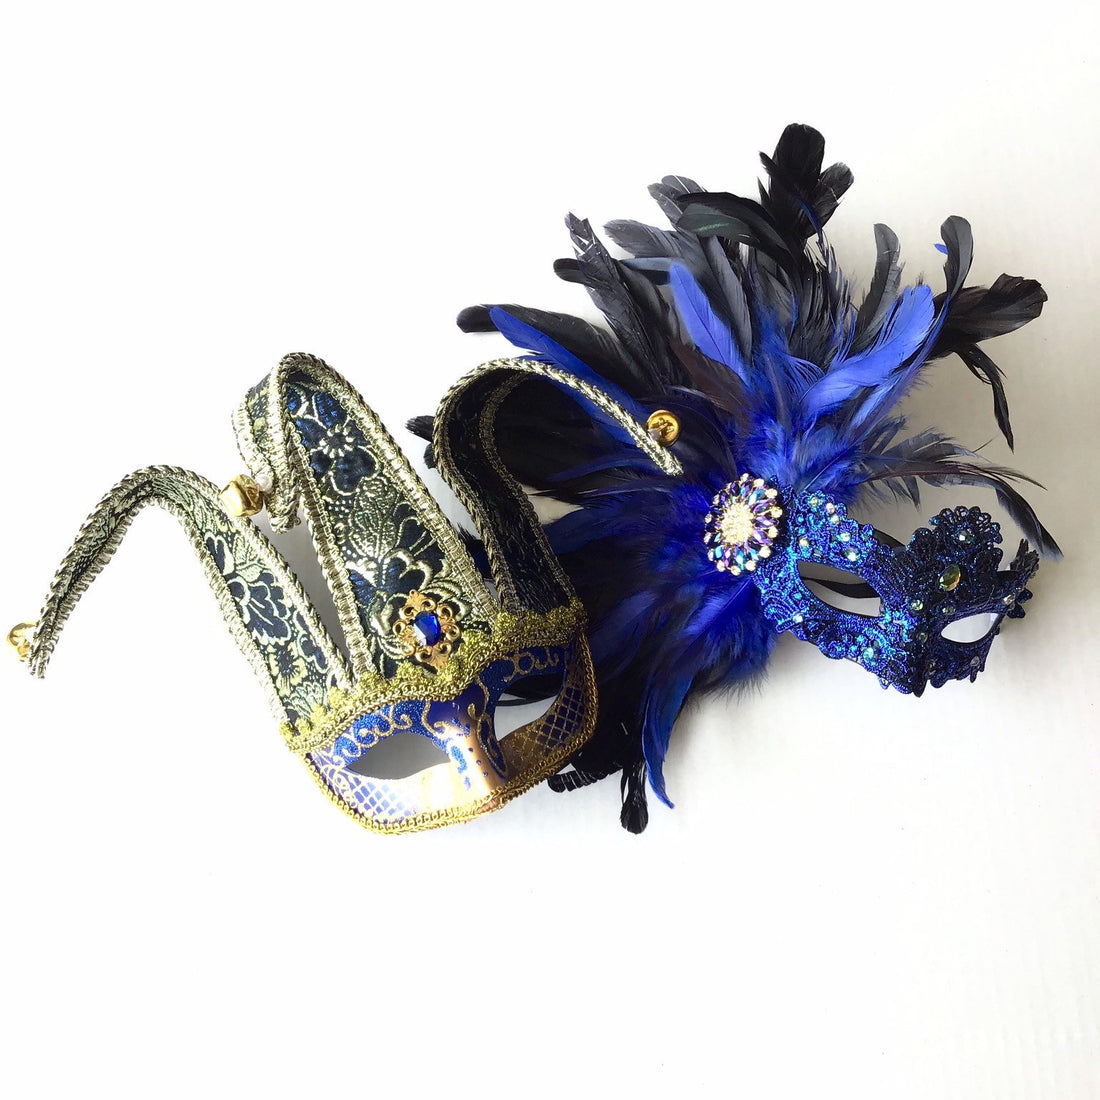 Jester Carnival Masks - Blue